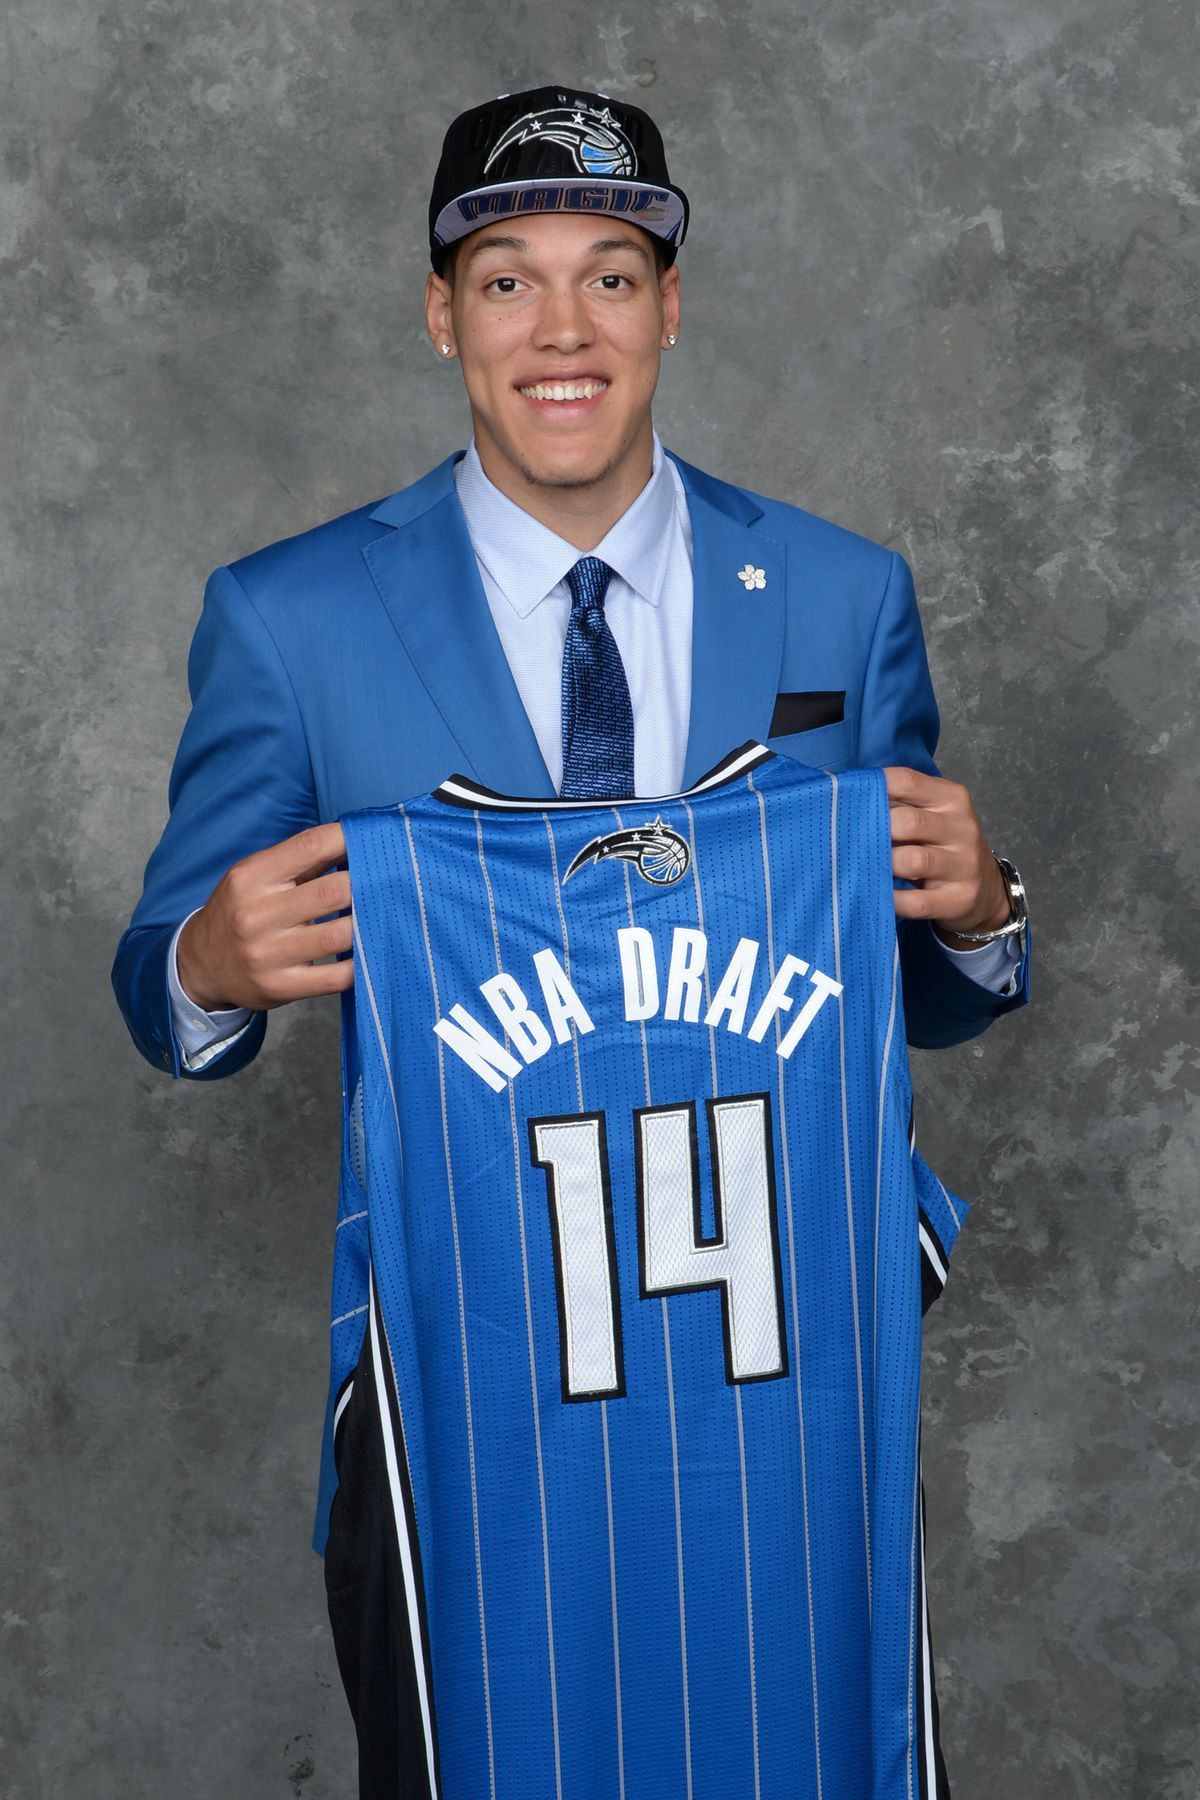 2014 NBA Draft